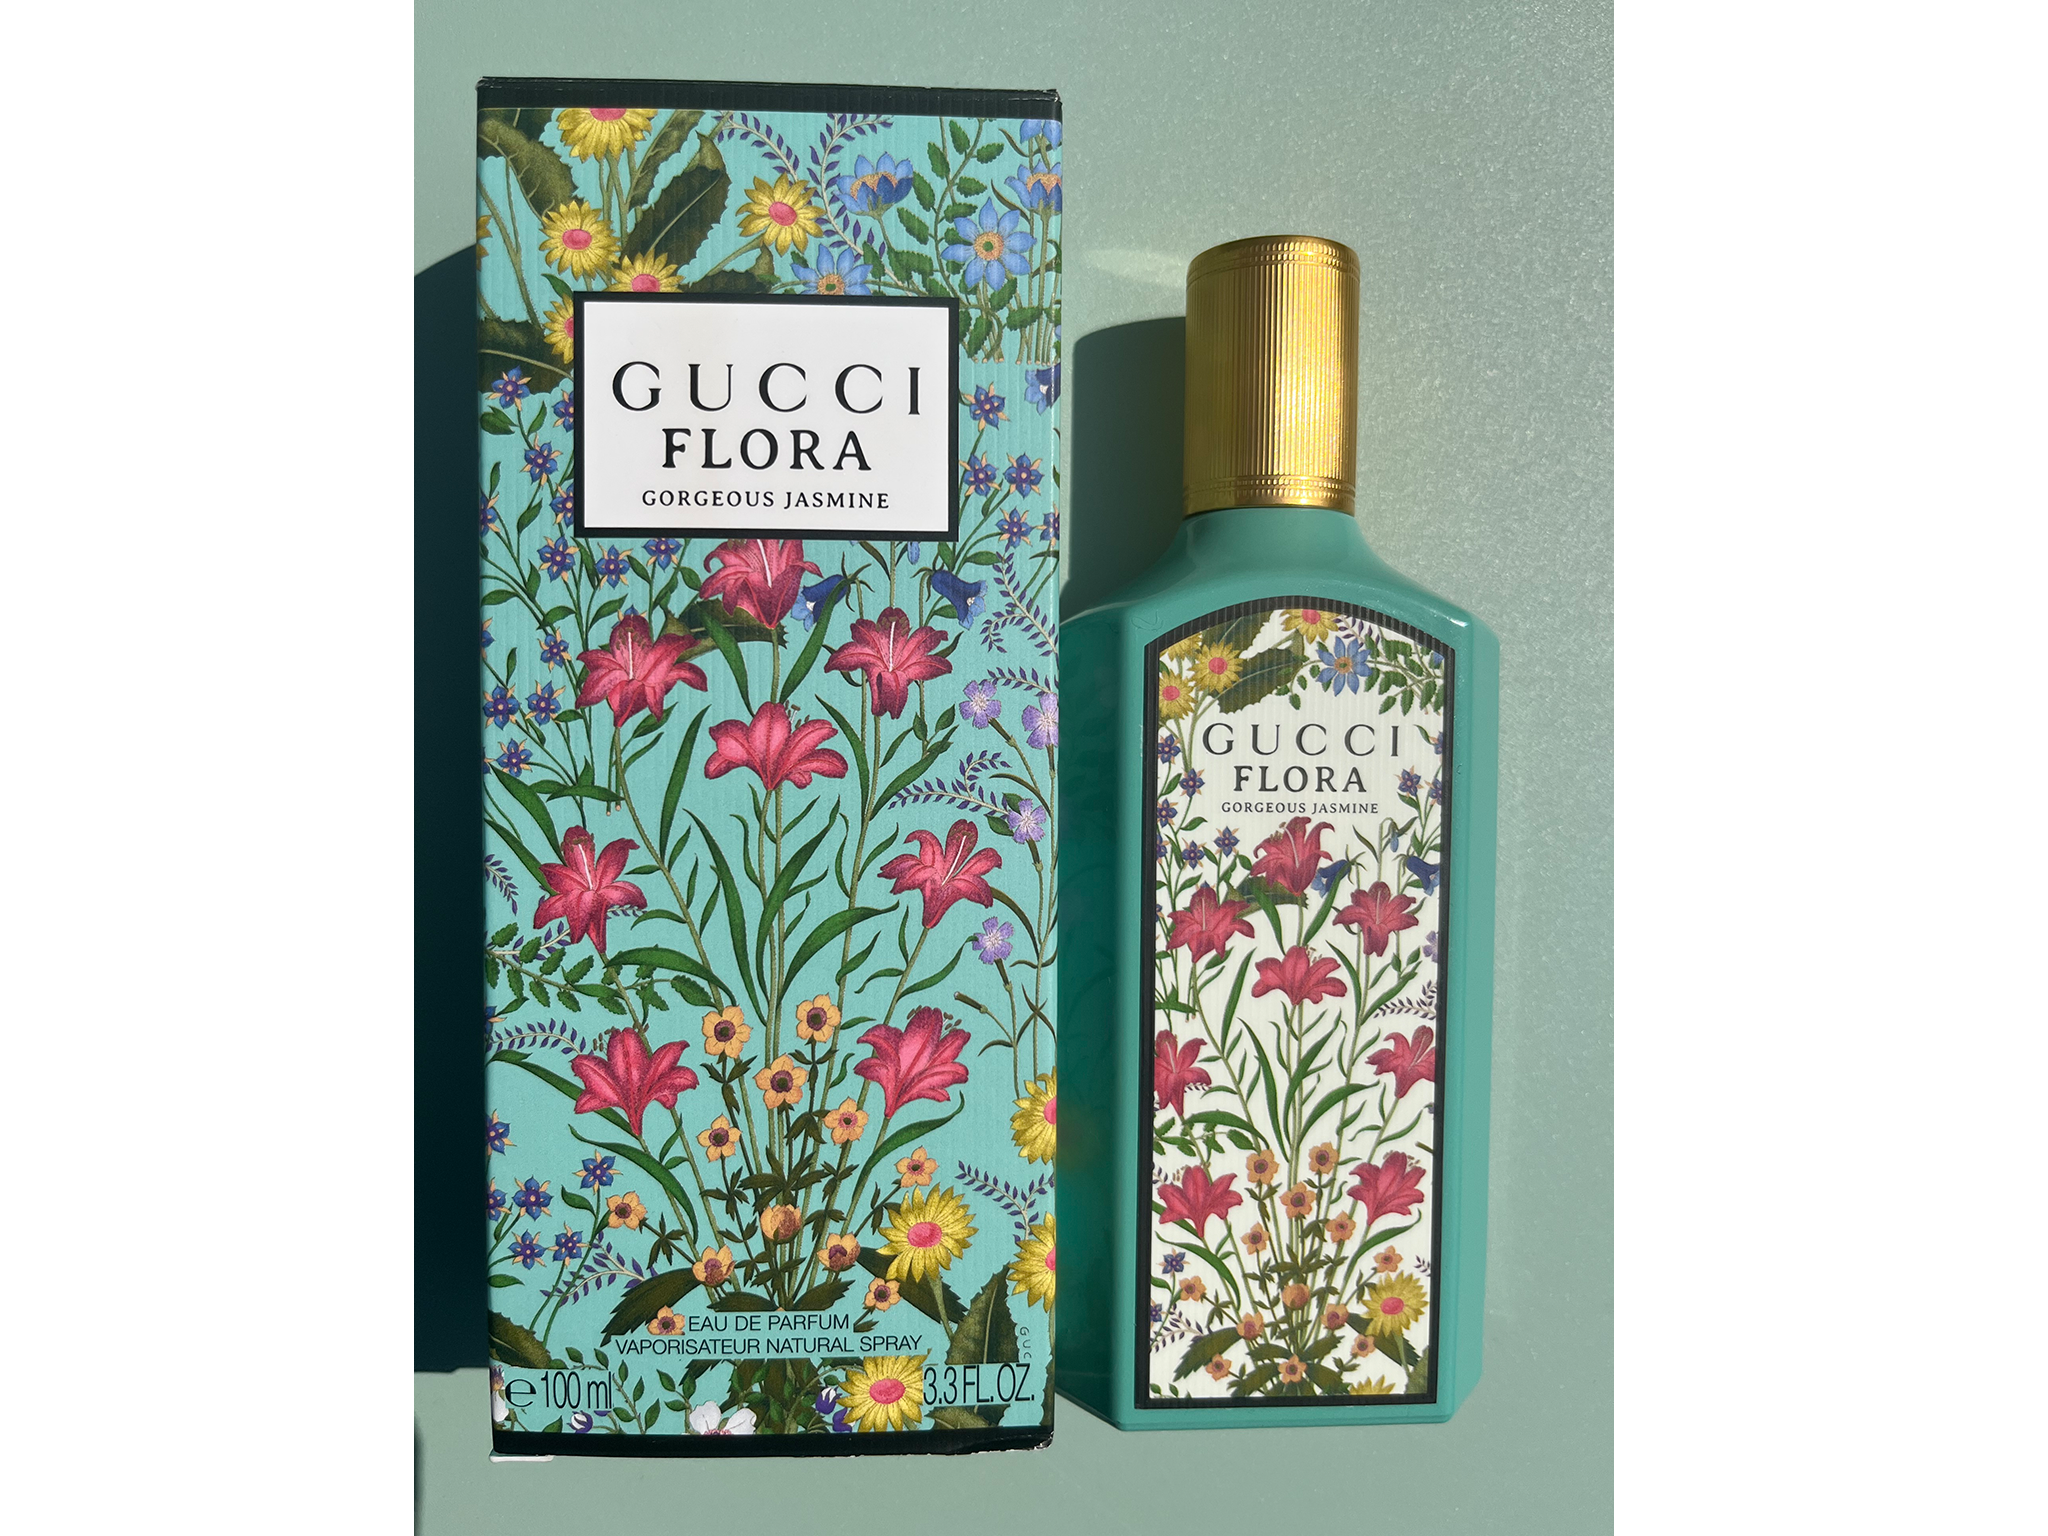 Gucci flora gorgeous jasmine, 100ml.png